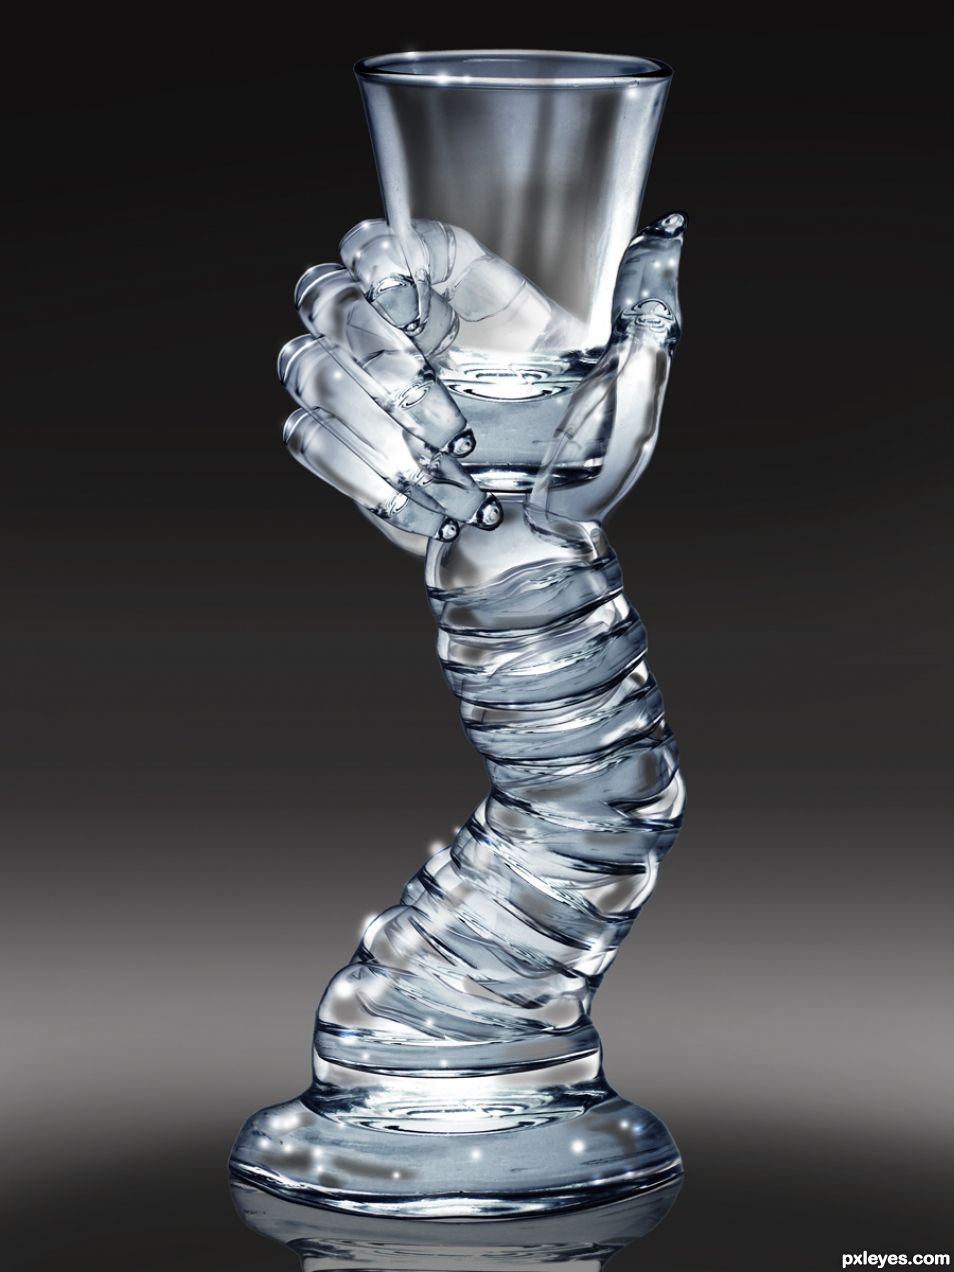 Creation of Glass, Glassholder: Final Result